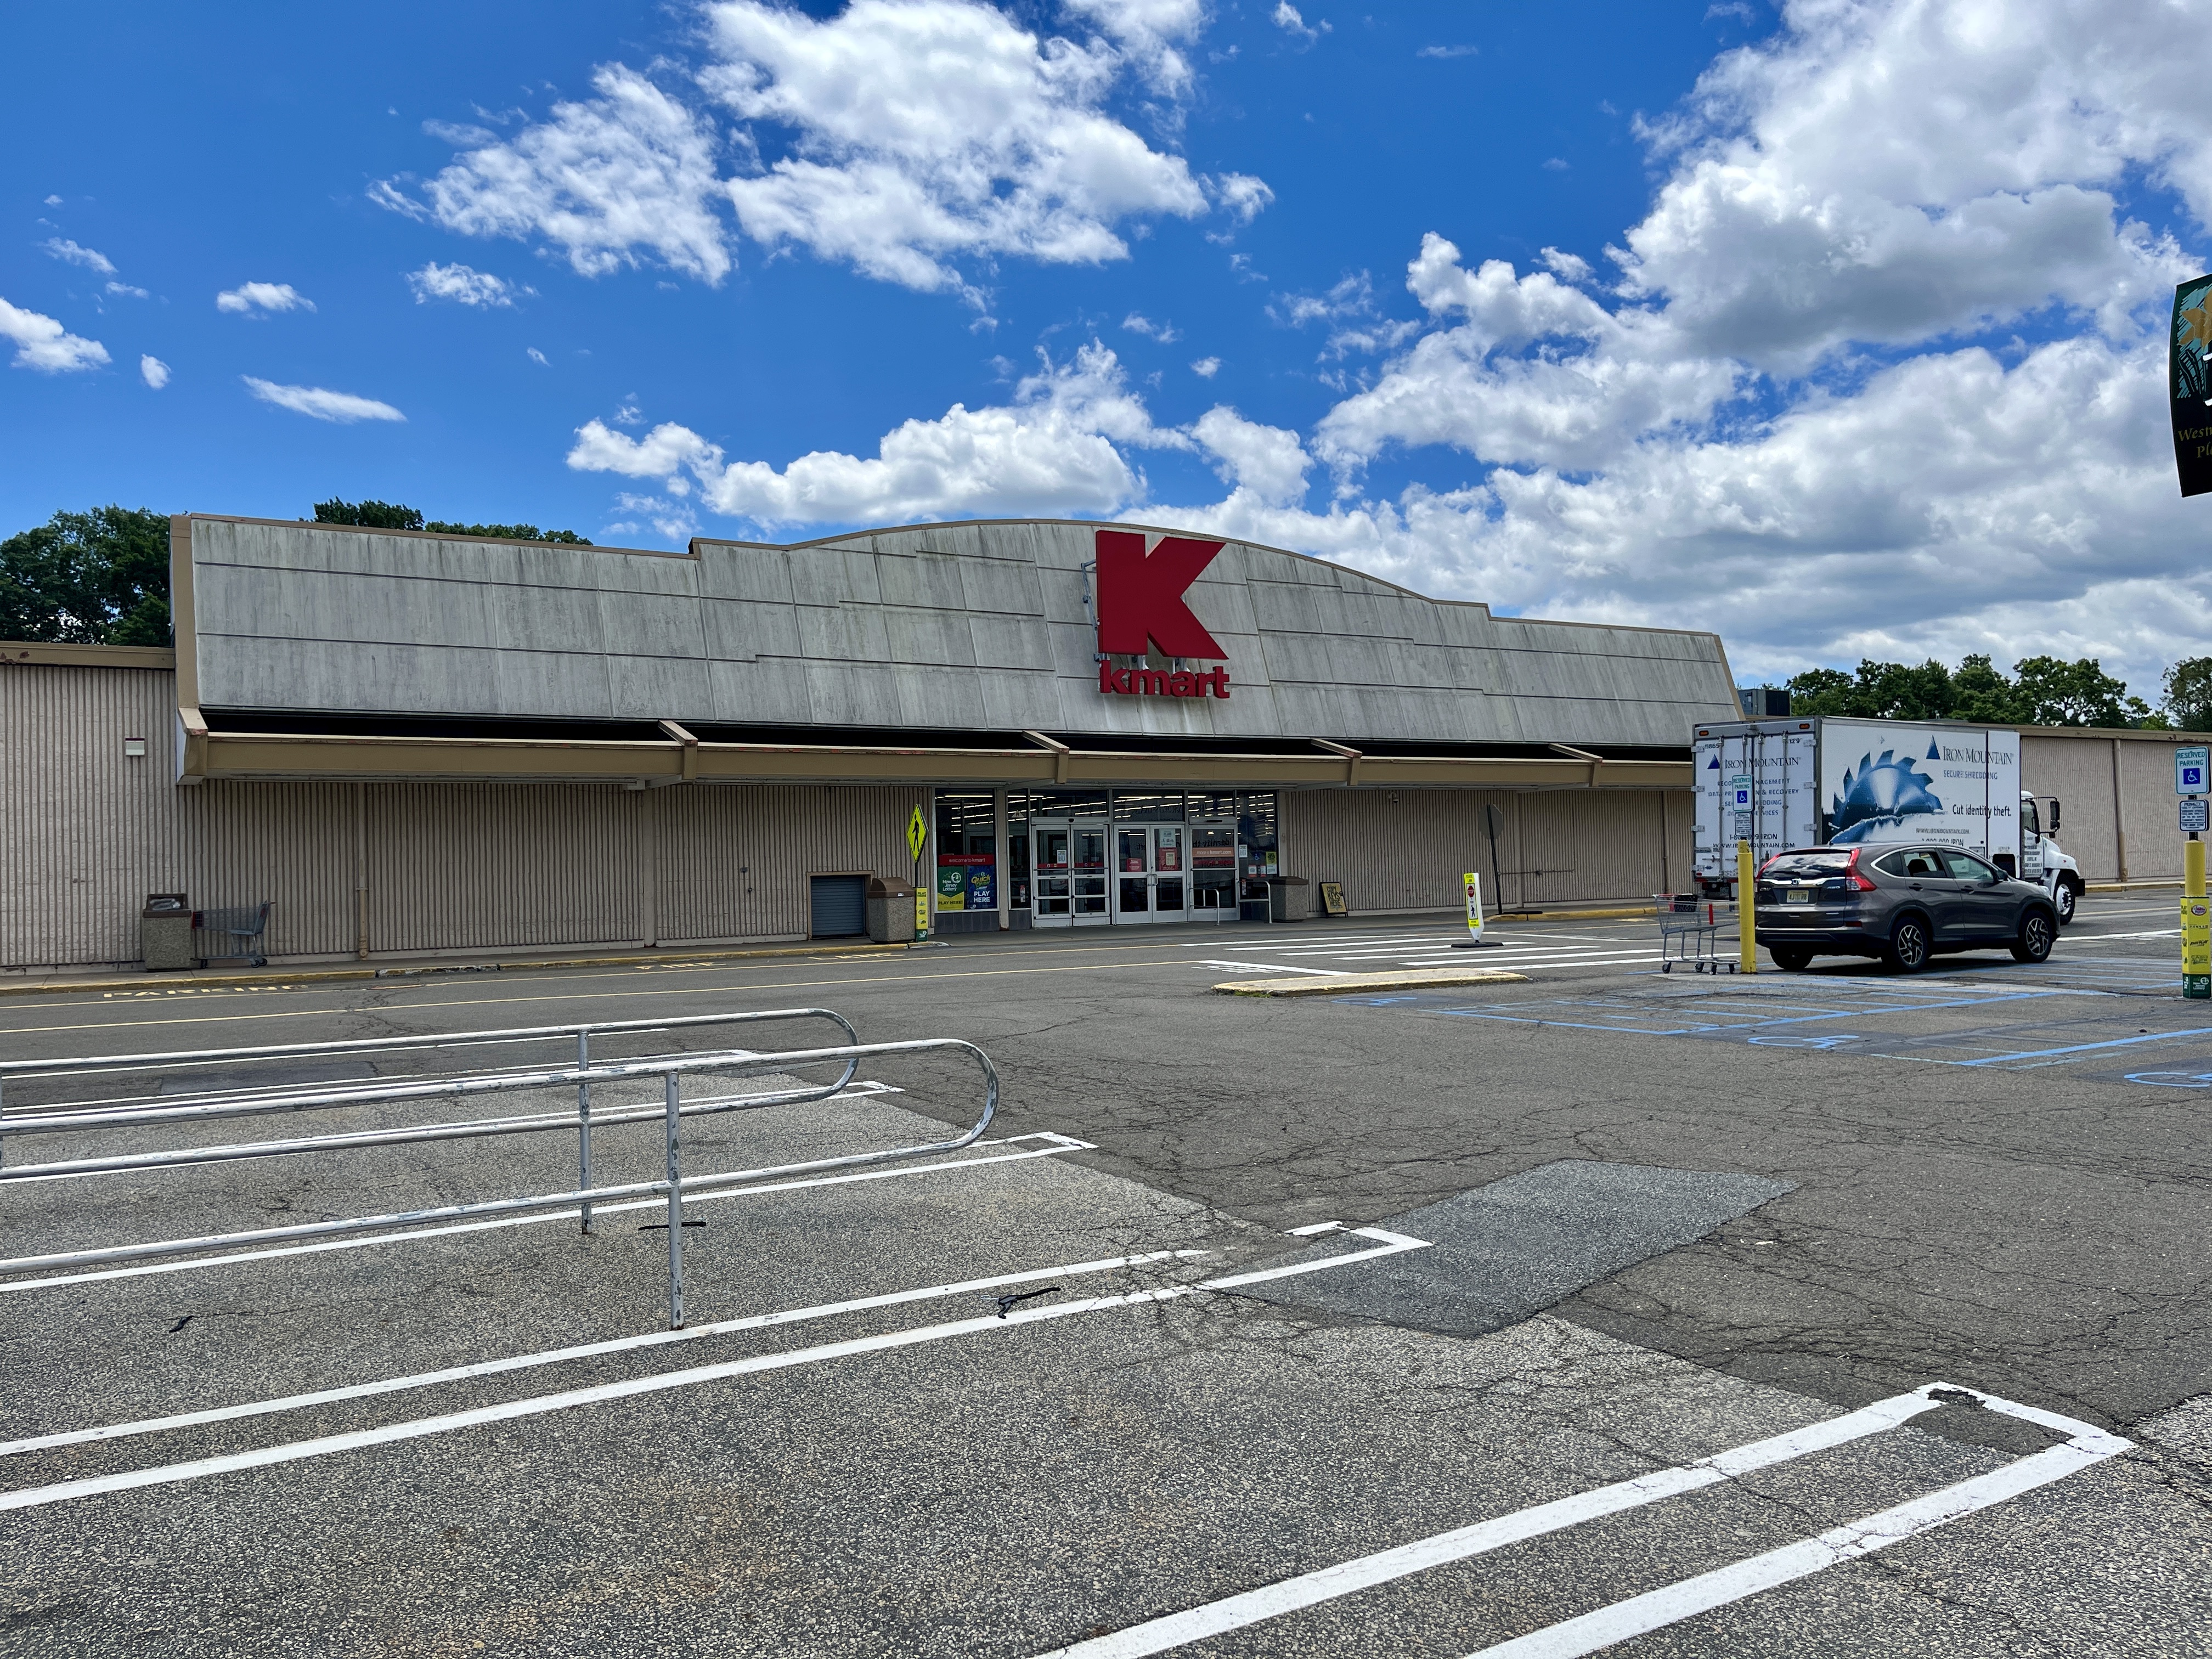 CLOSED K-Mart - West Long Branch, NJ 